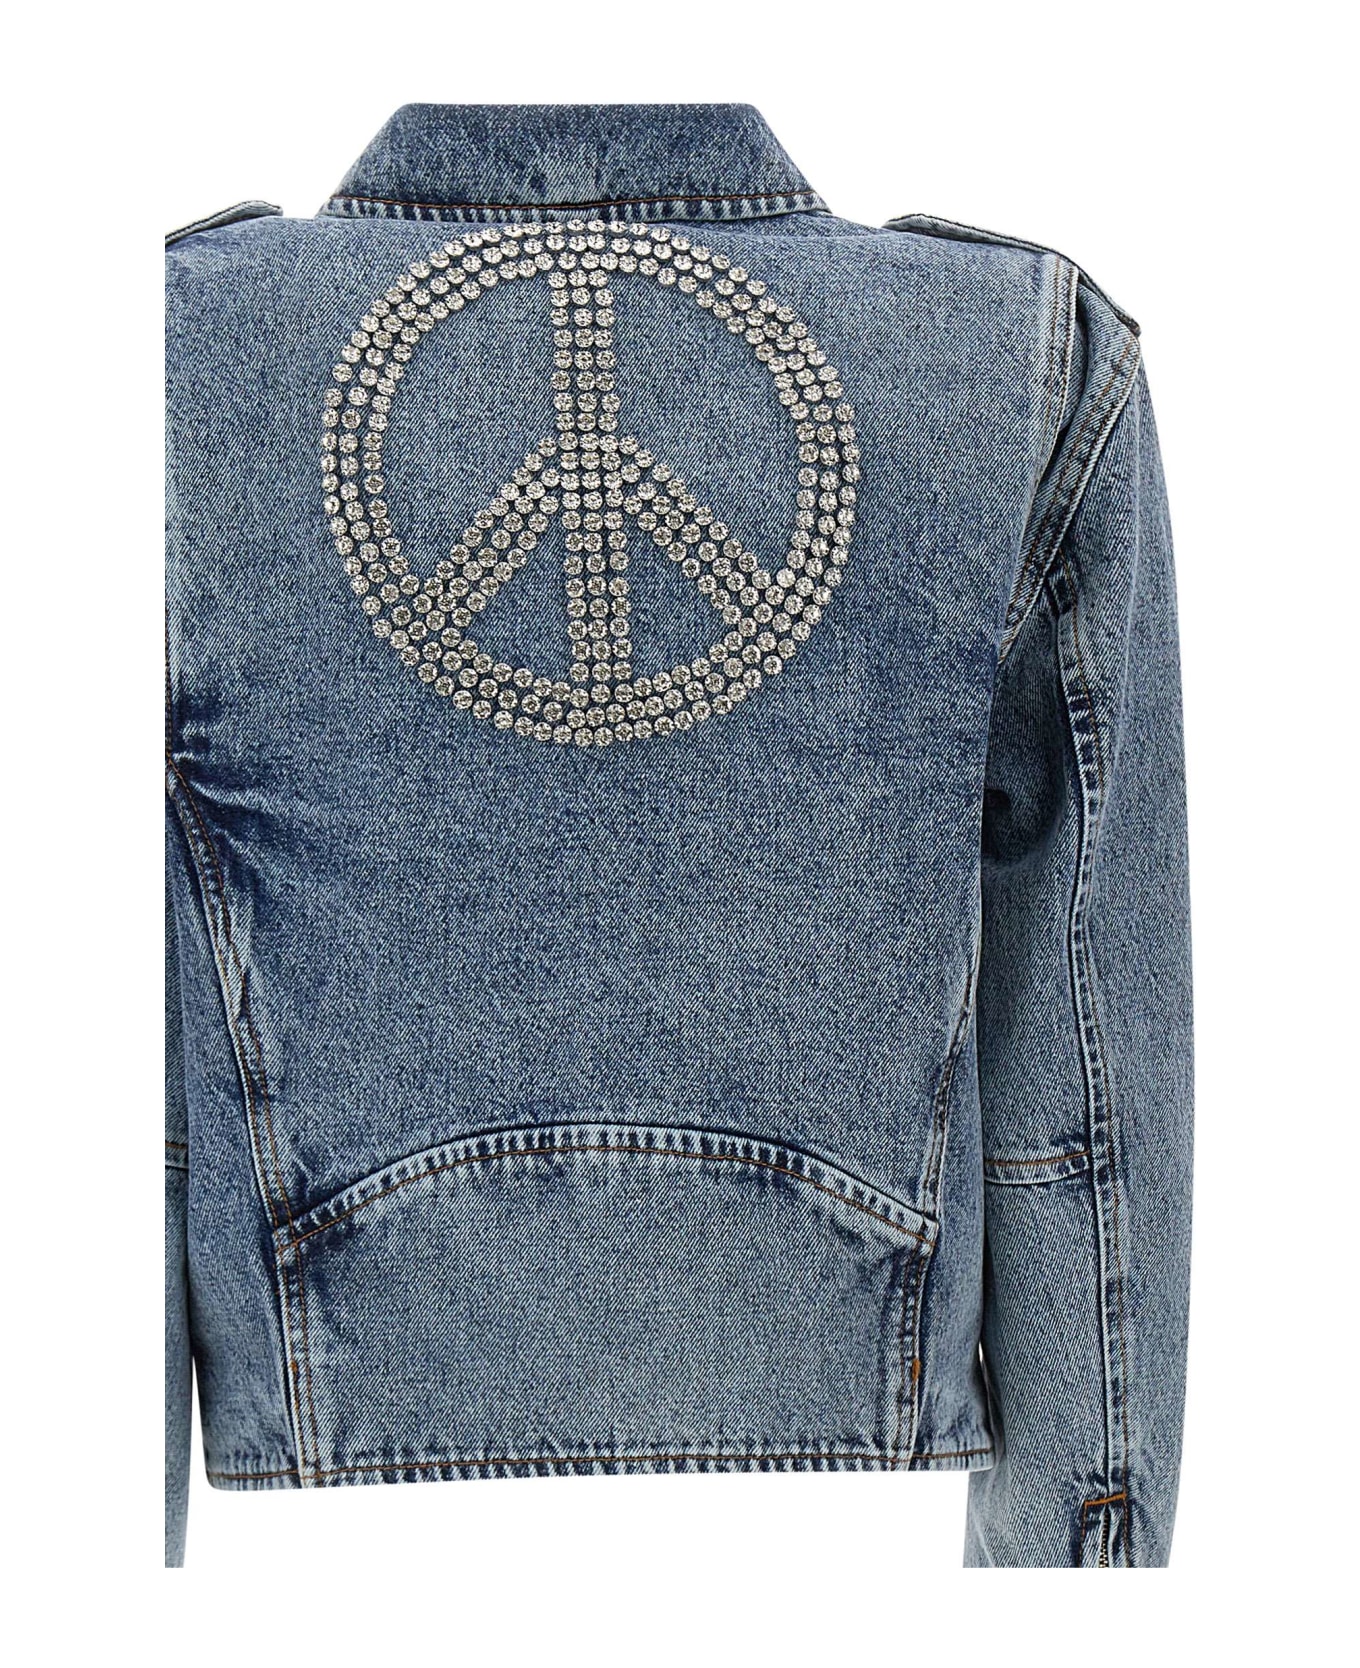 M05CH1N0 Jeans 'peace Symbol' Biker Jacket - BLUE